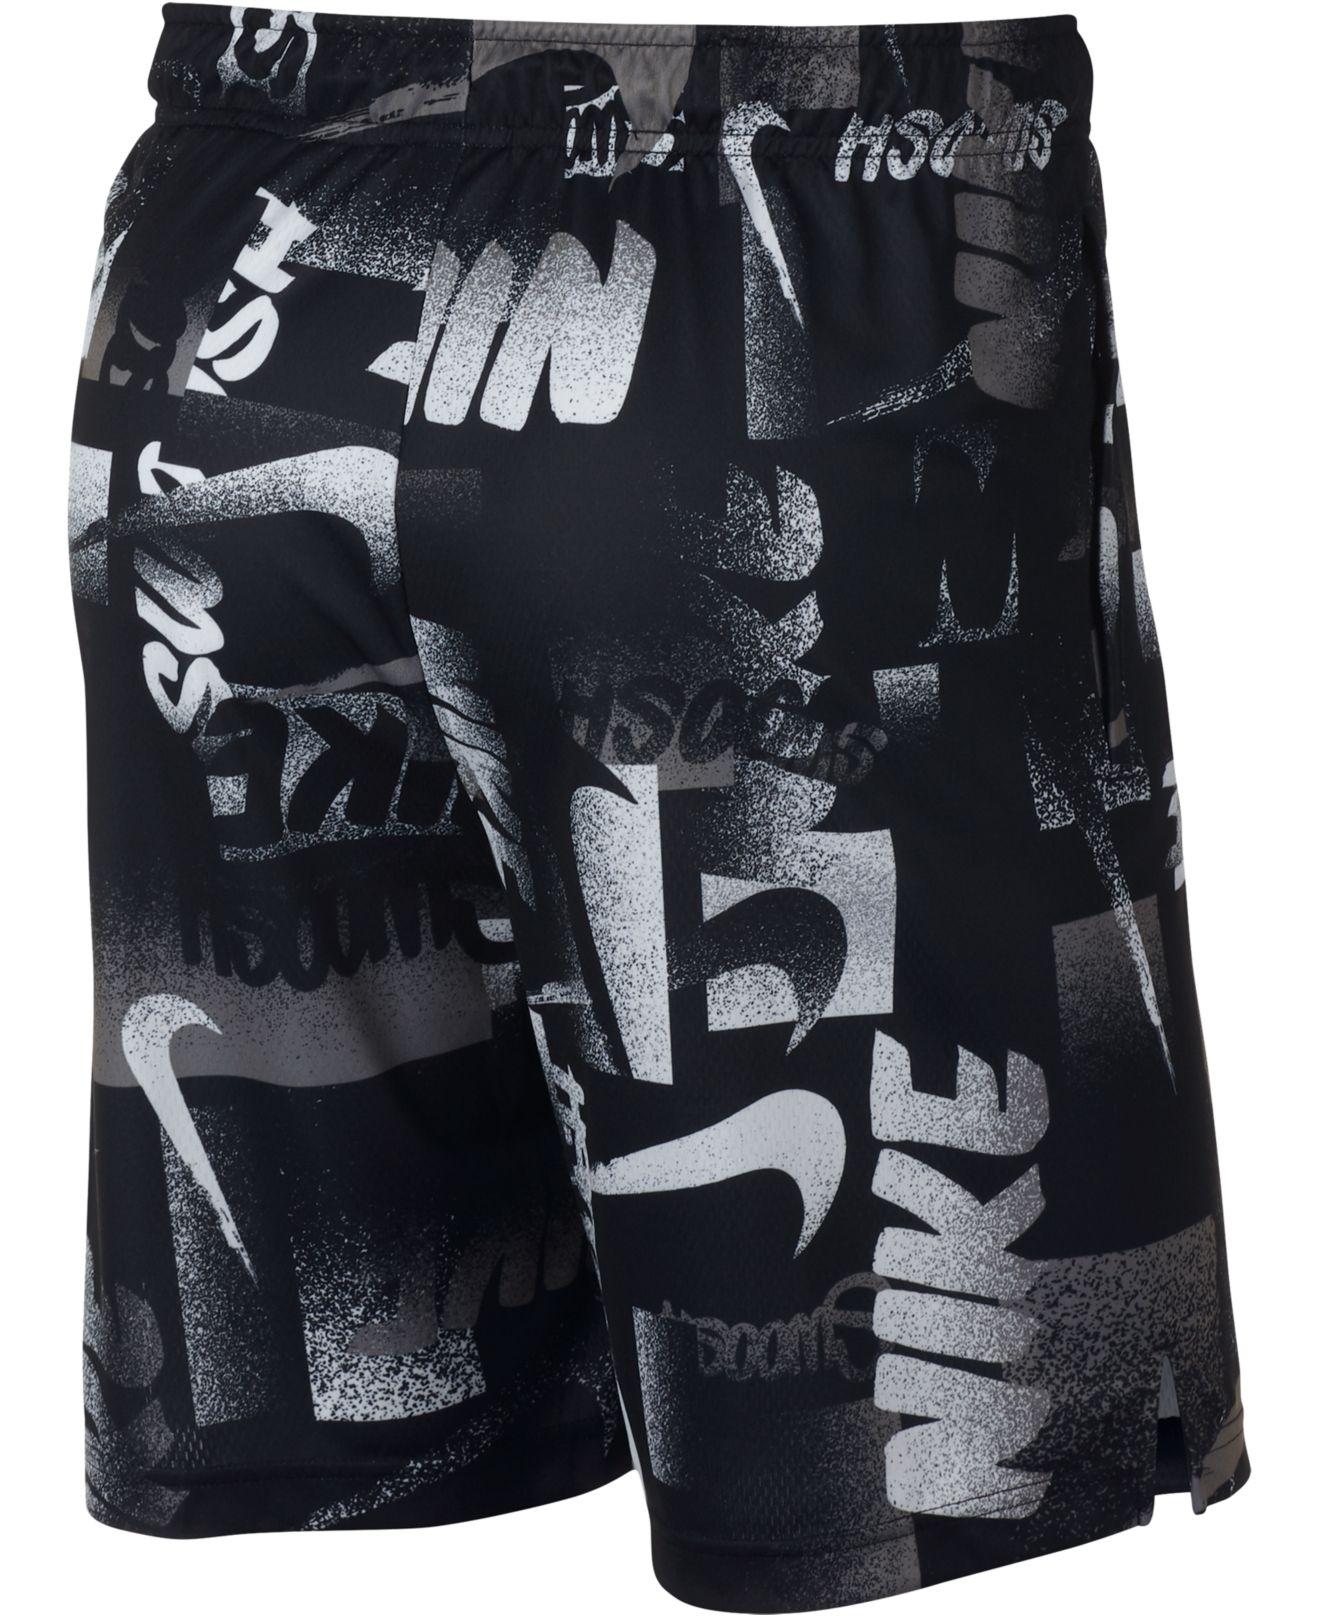 Nike Synthetic Dry Allover Print 4.0 Training Shorts in Black/Black (Black)  for Men - Lyst